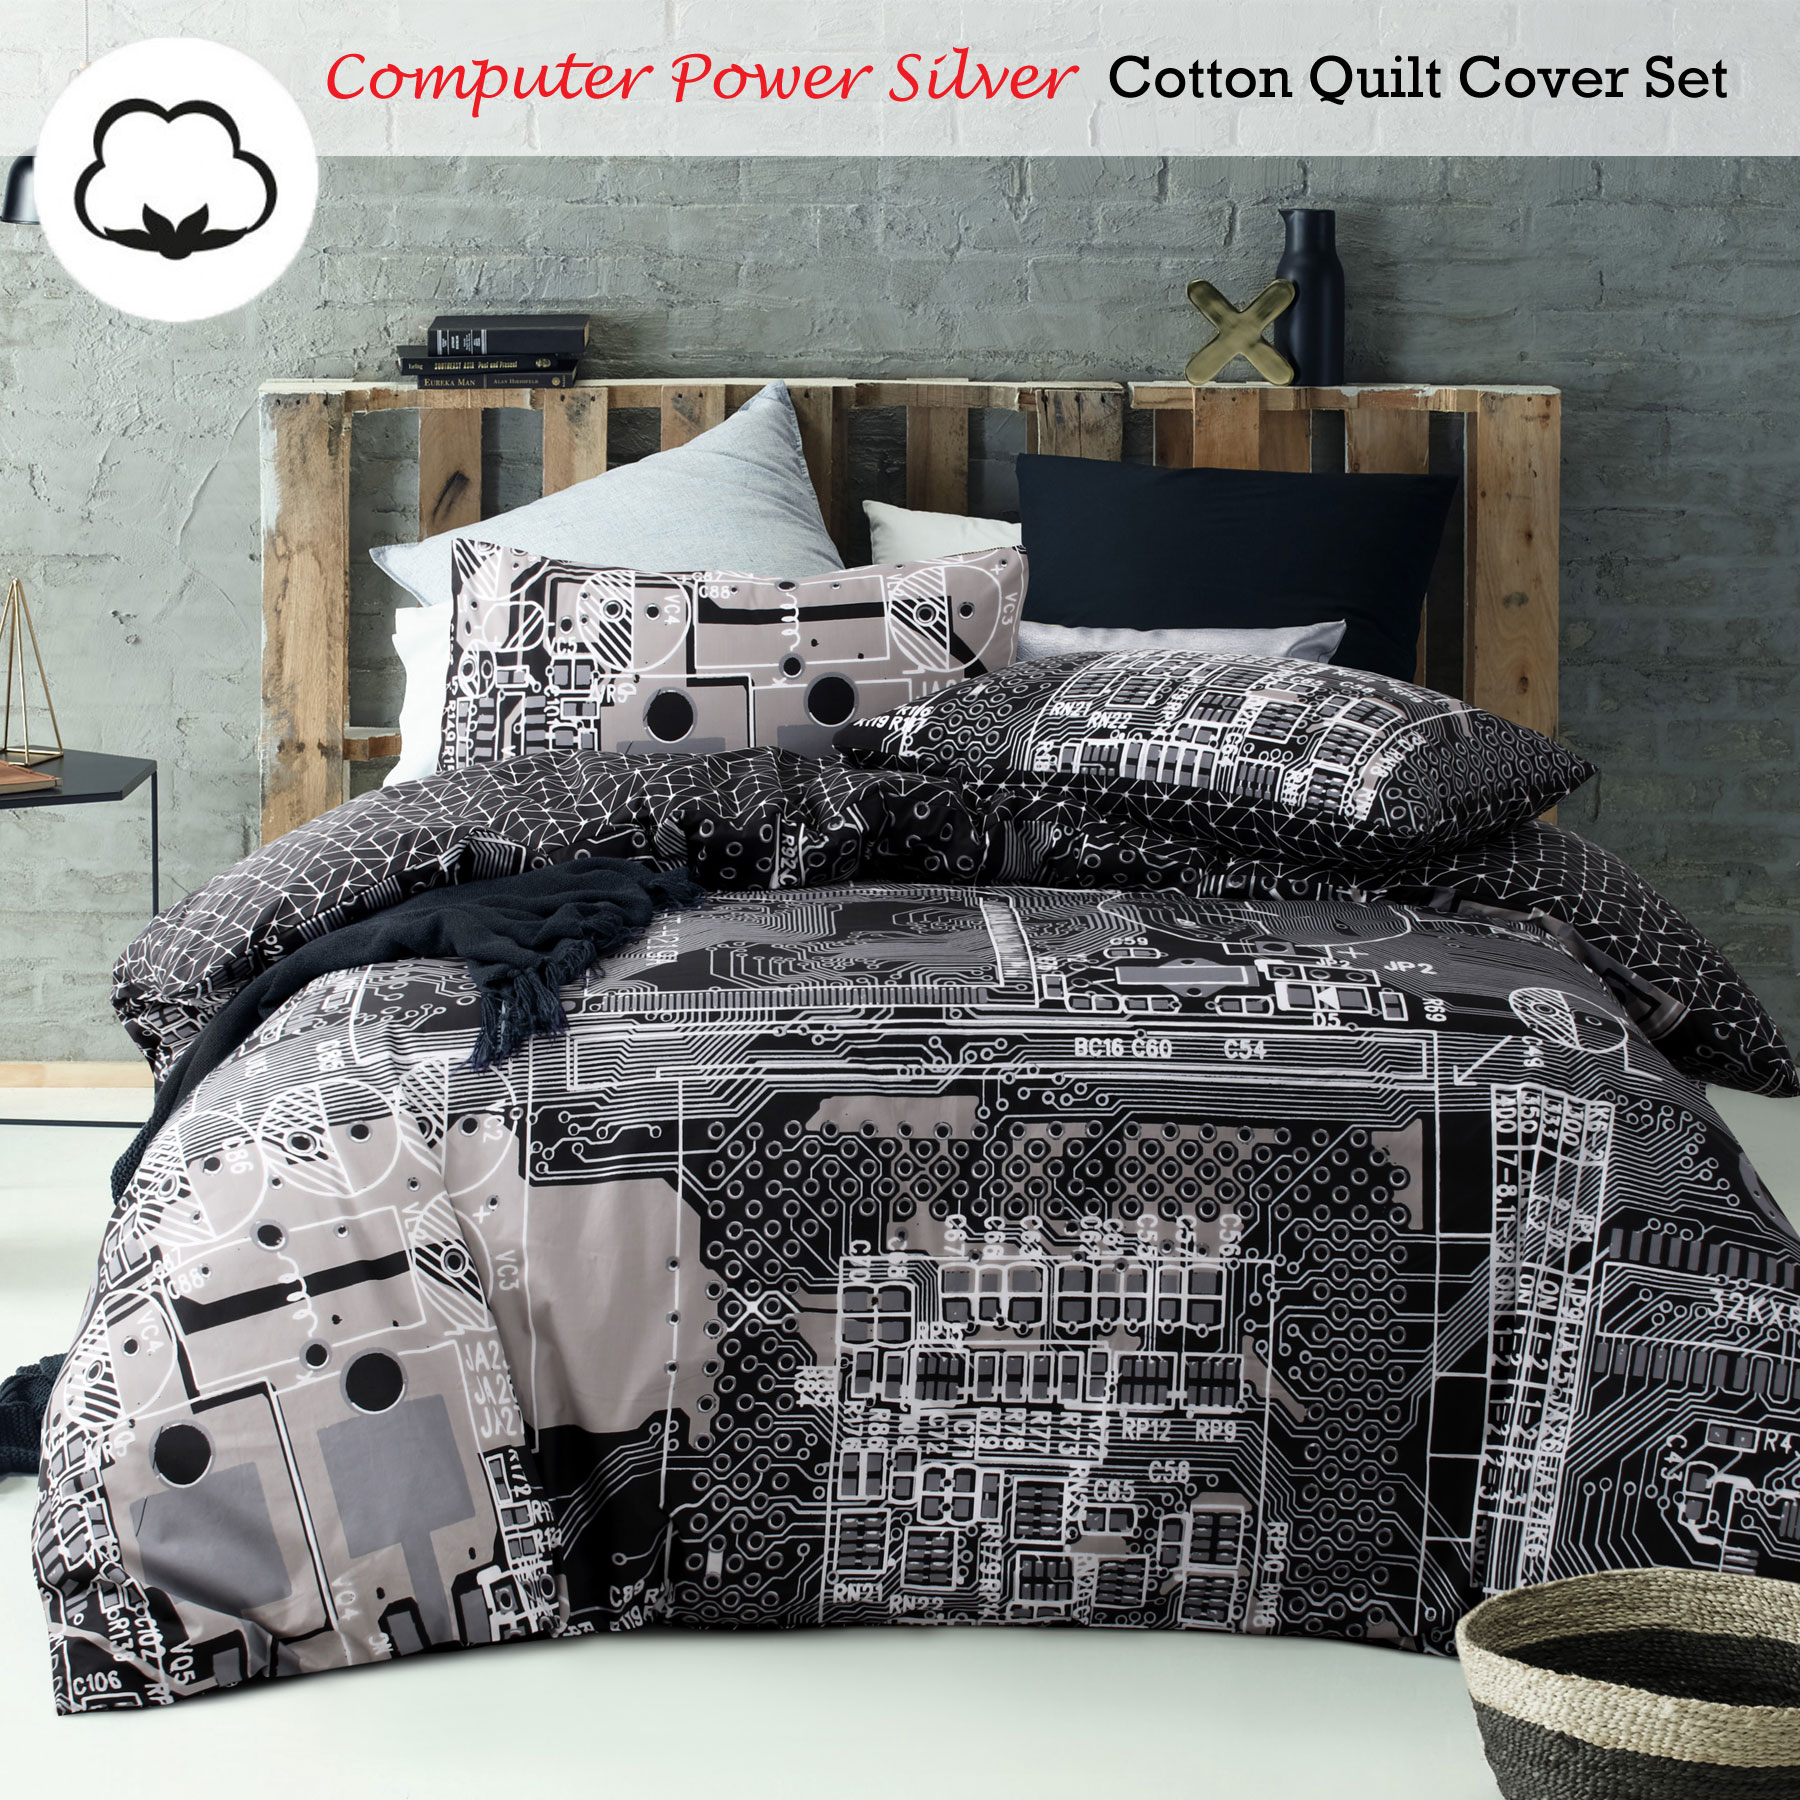 100 Cotton Computer Power Technology Silver Quilt Cover Set